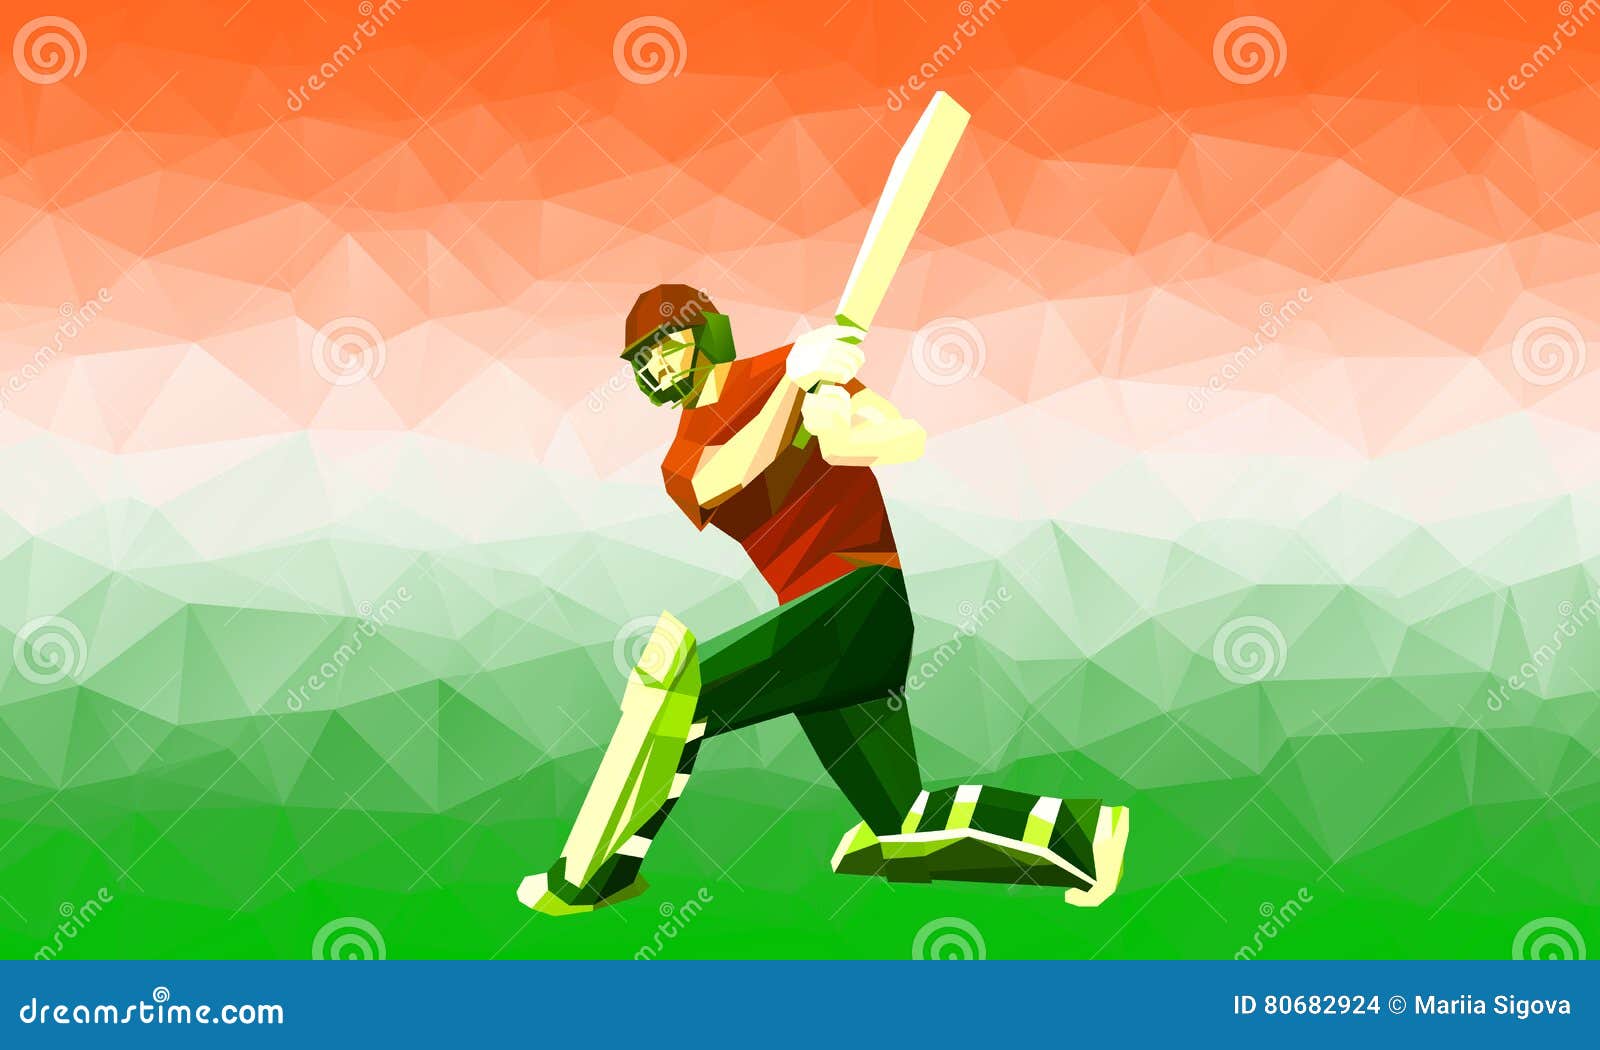 Cricket PNG Transparent Images Free Download  Vector Files  Pngtree